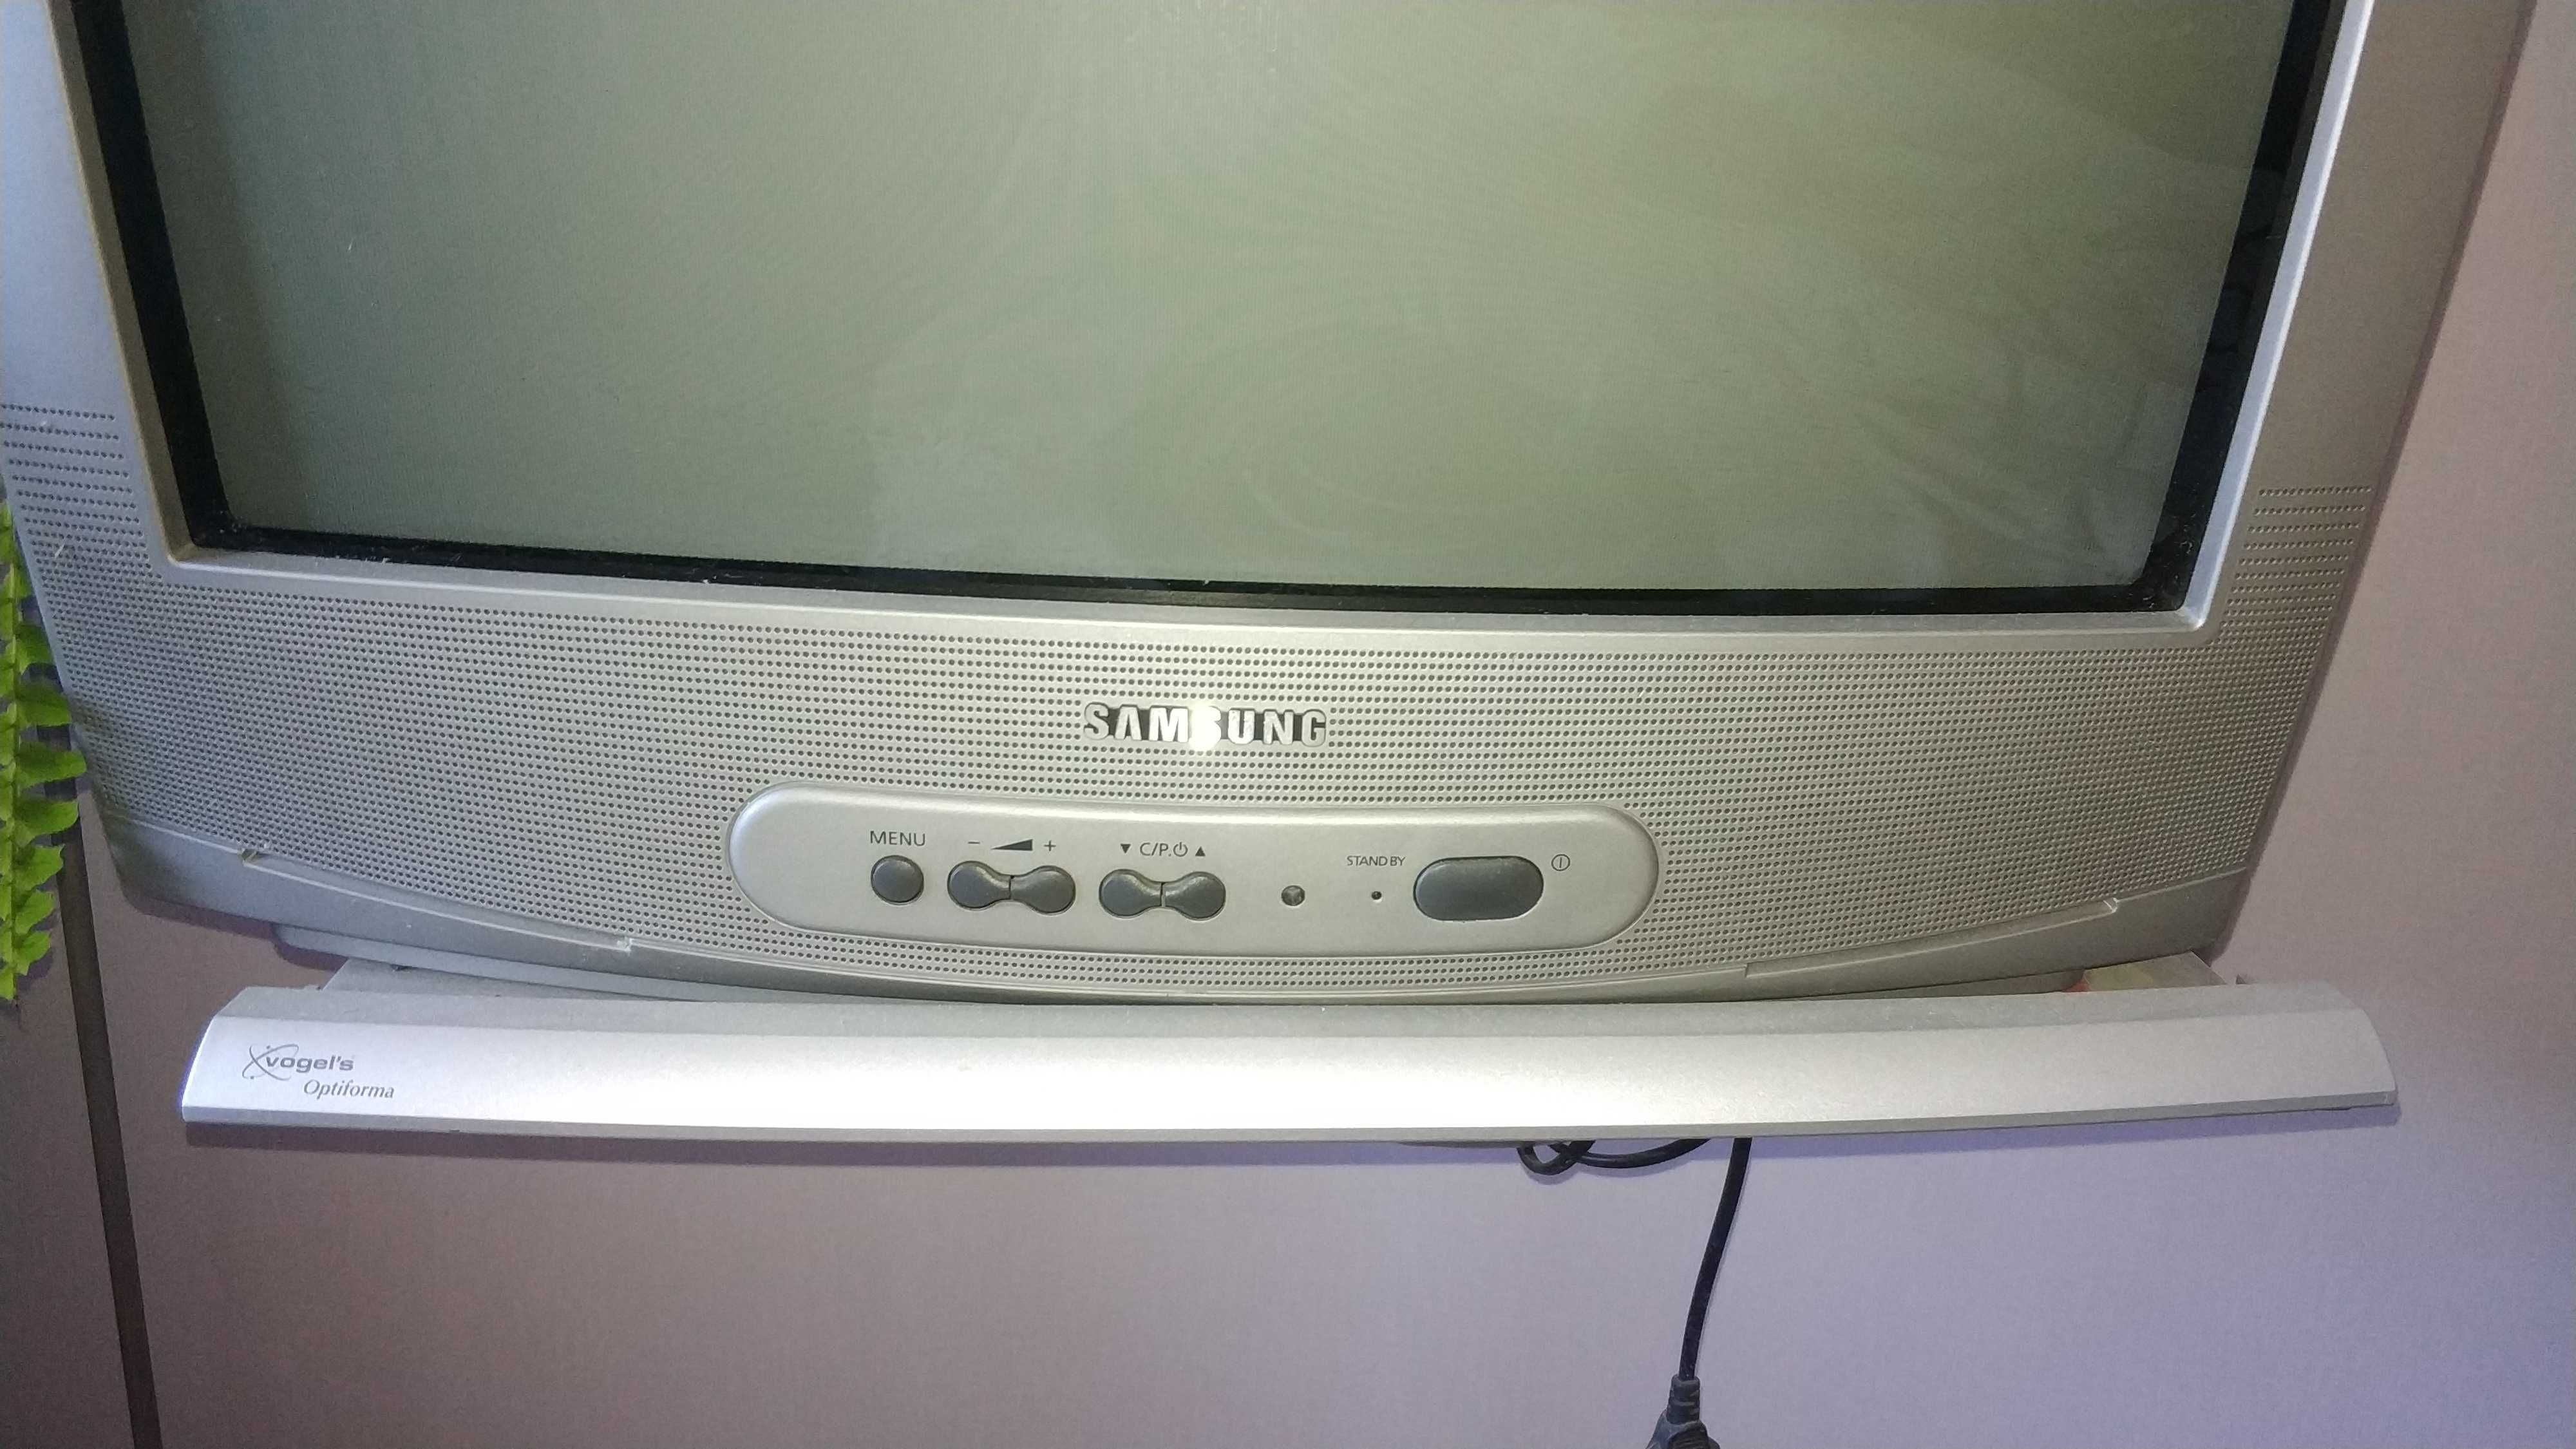 Телевизор Samsung CS-21F5R